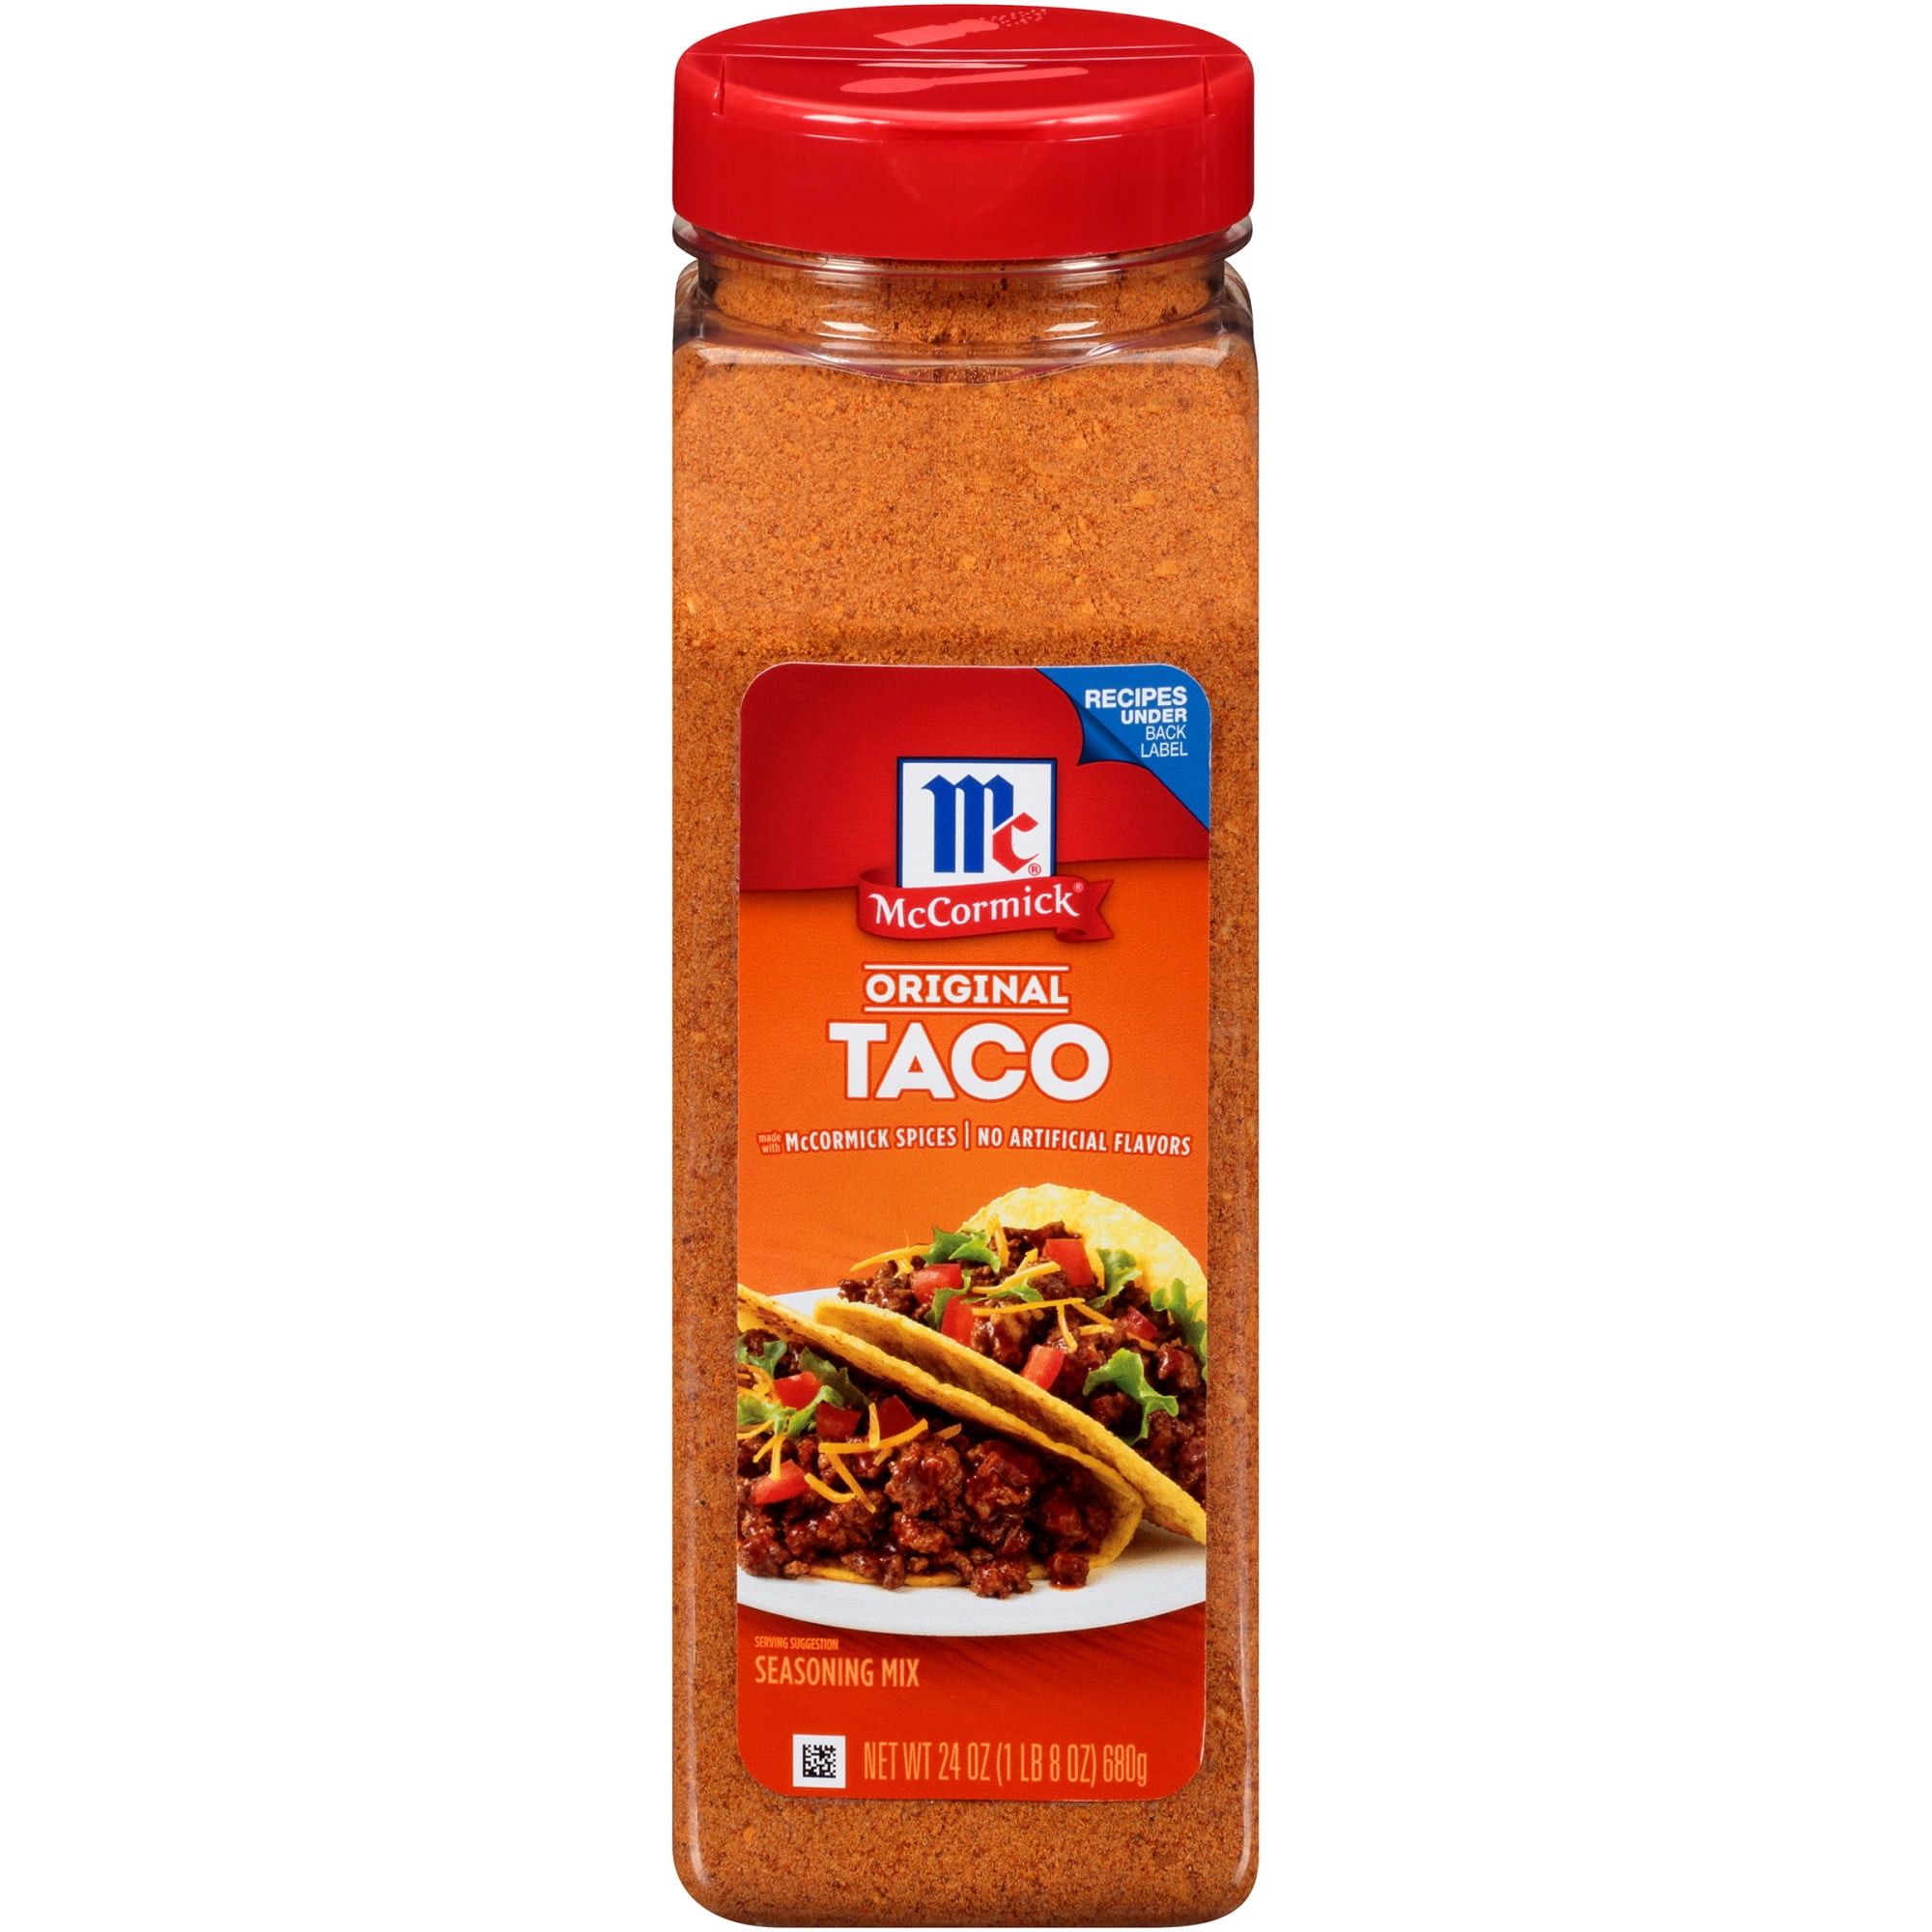 McCormick Taco Seasoning Mix 24 oz Walmart Inventory Checker BrickSeek